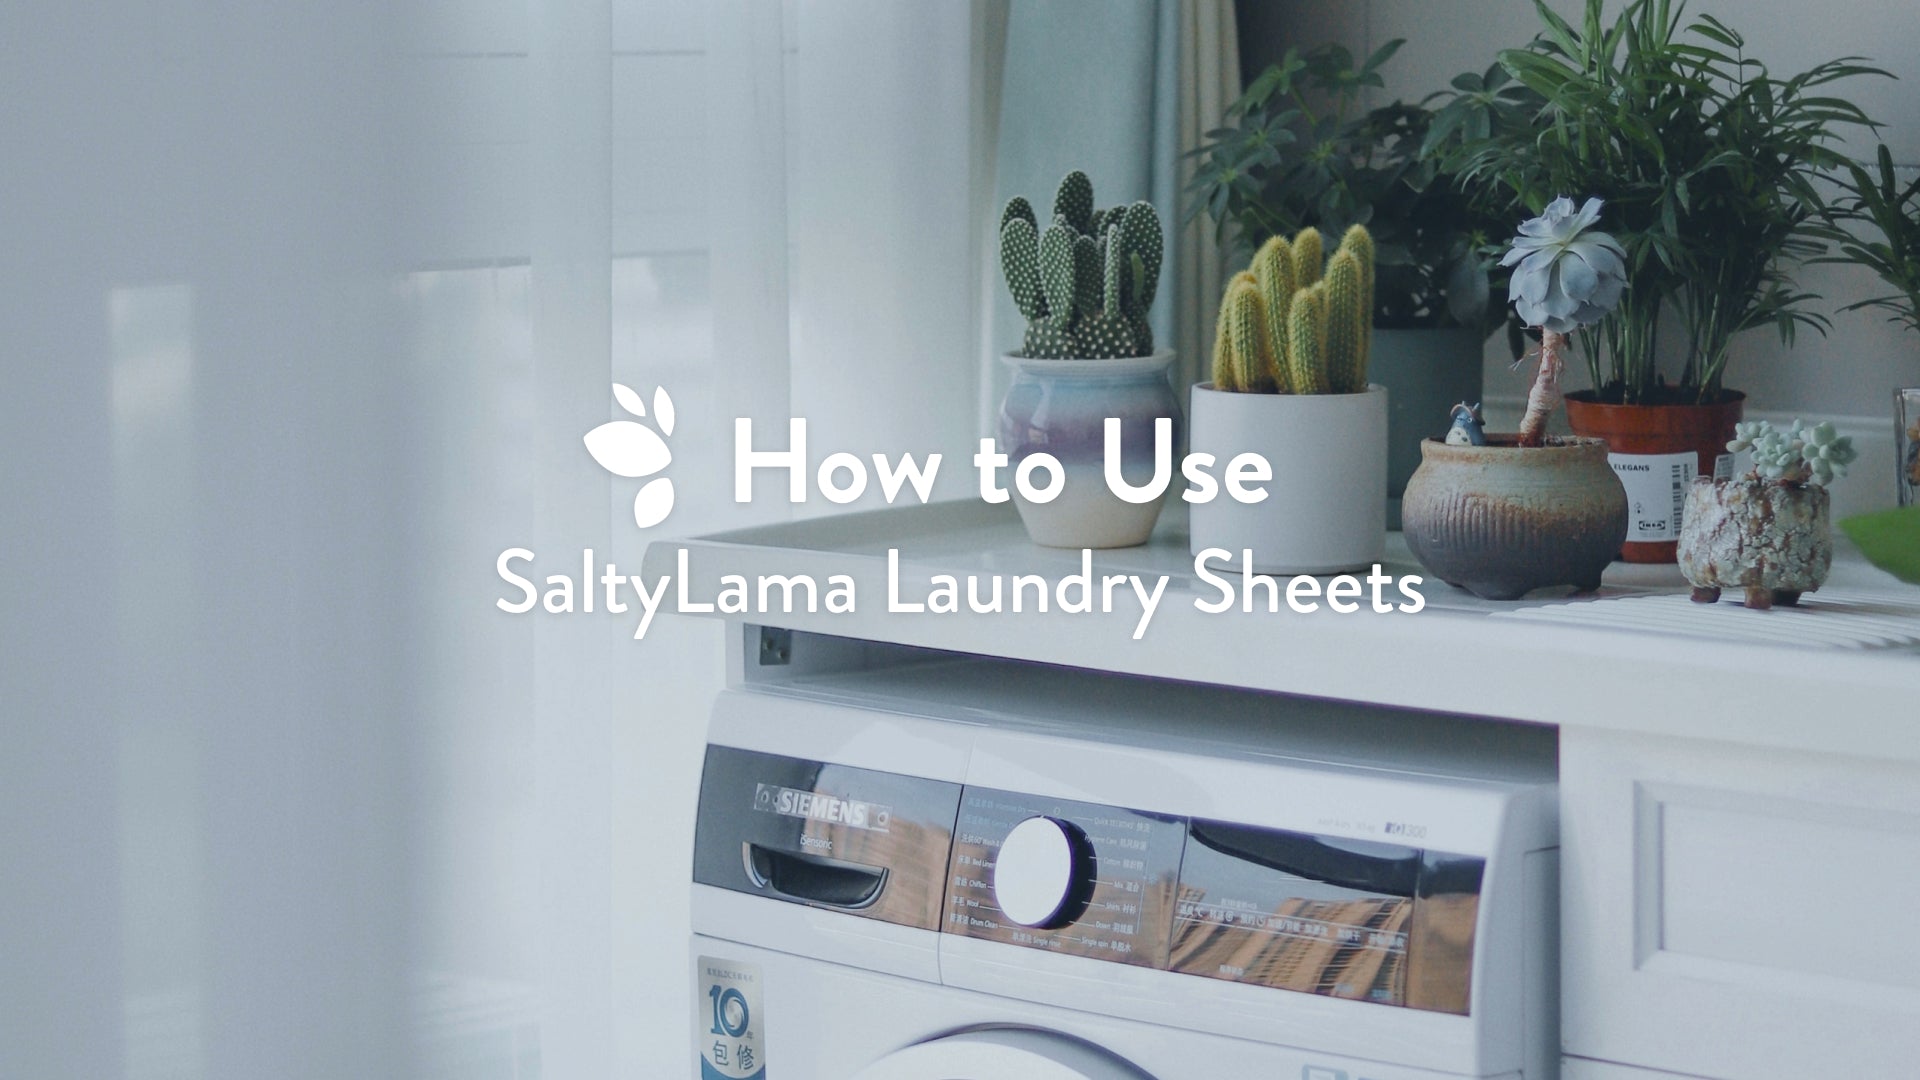 Load video: Laundry detergent, laundry detergent sheets, eco friendly laundry detergent, vegan, plastic free, hypoallergenic